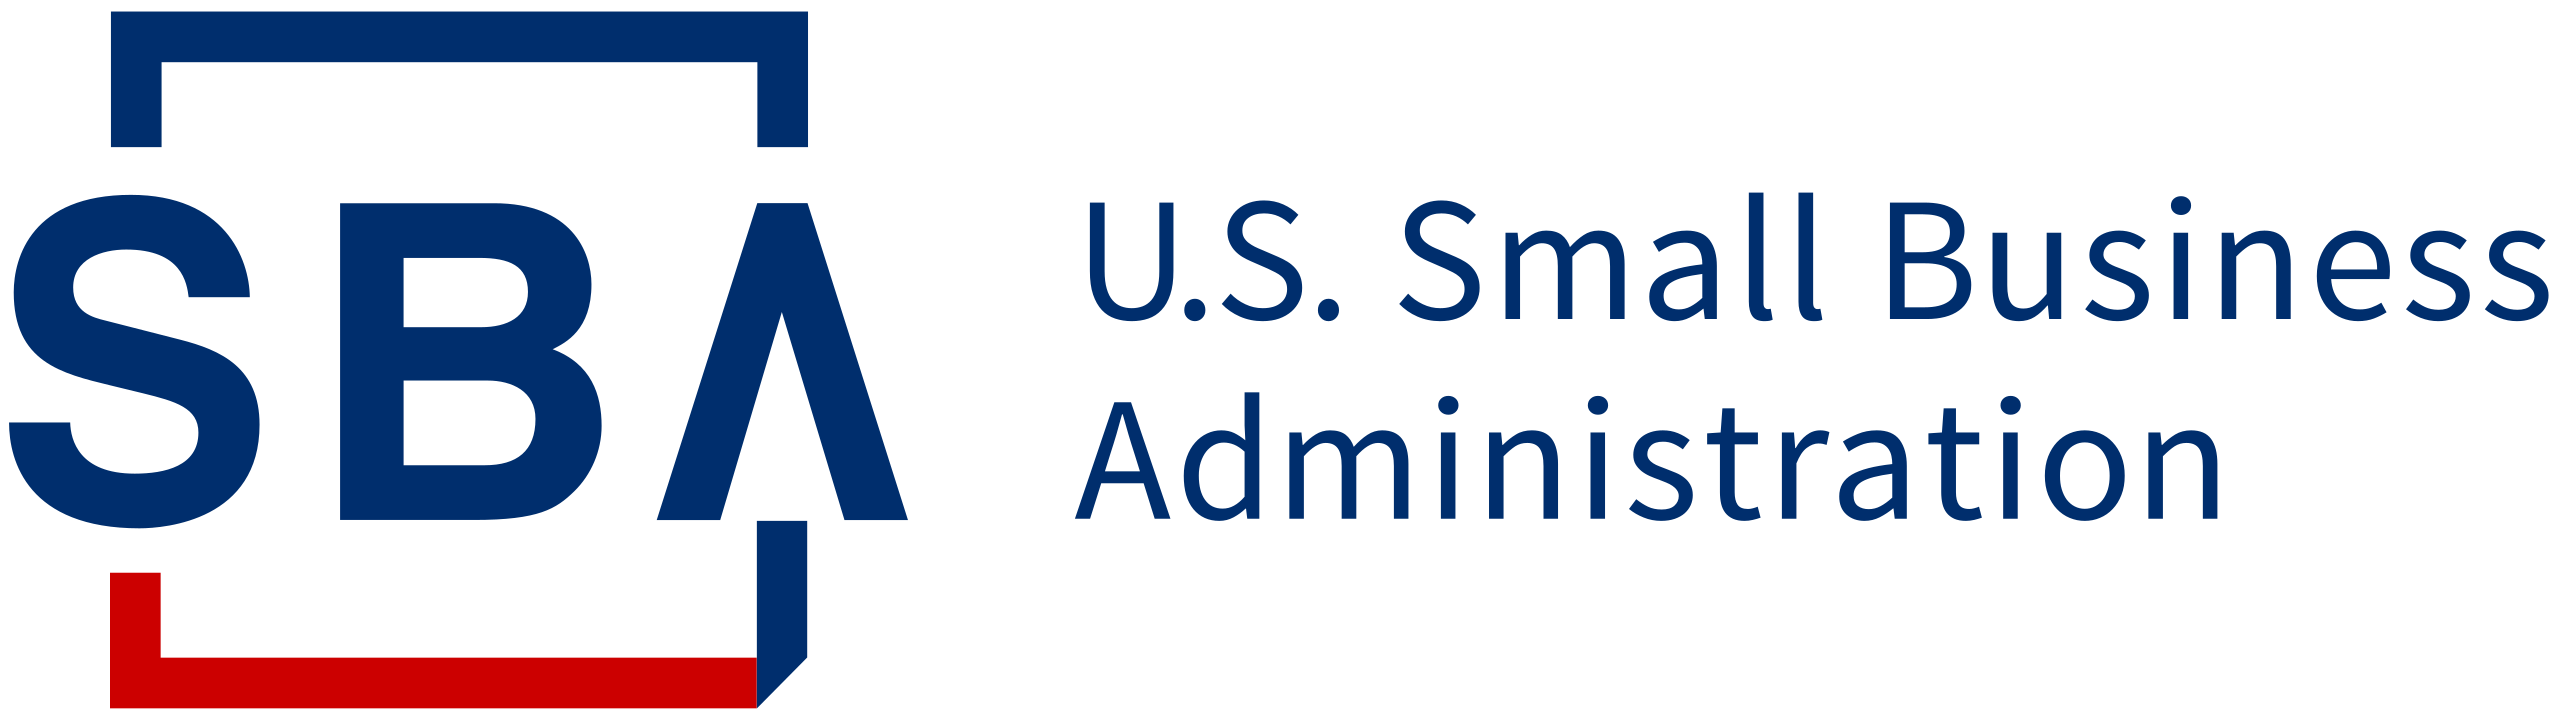 U.S._Small_Business_Administration_logo